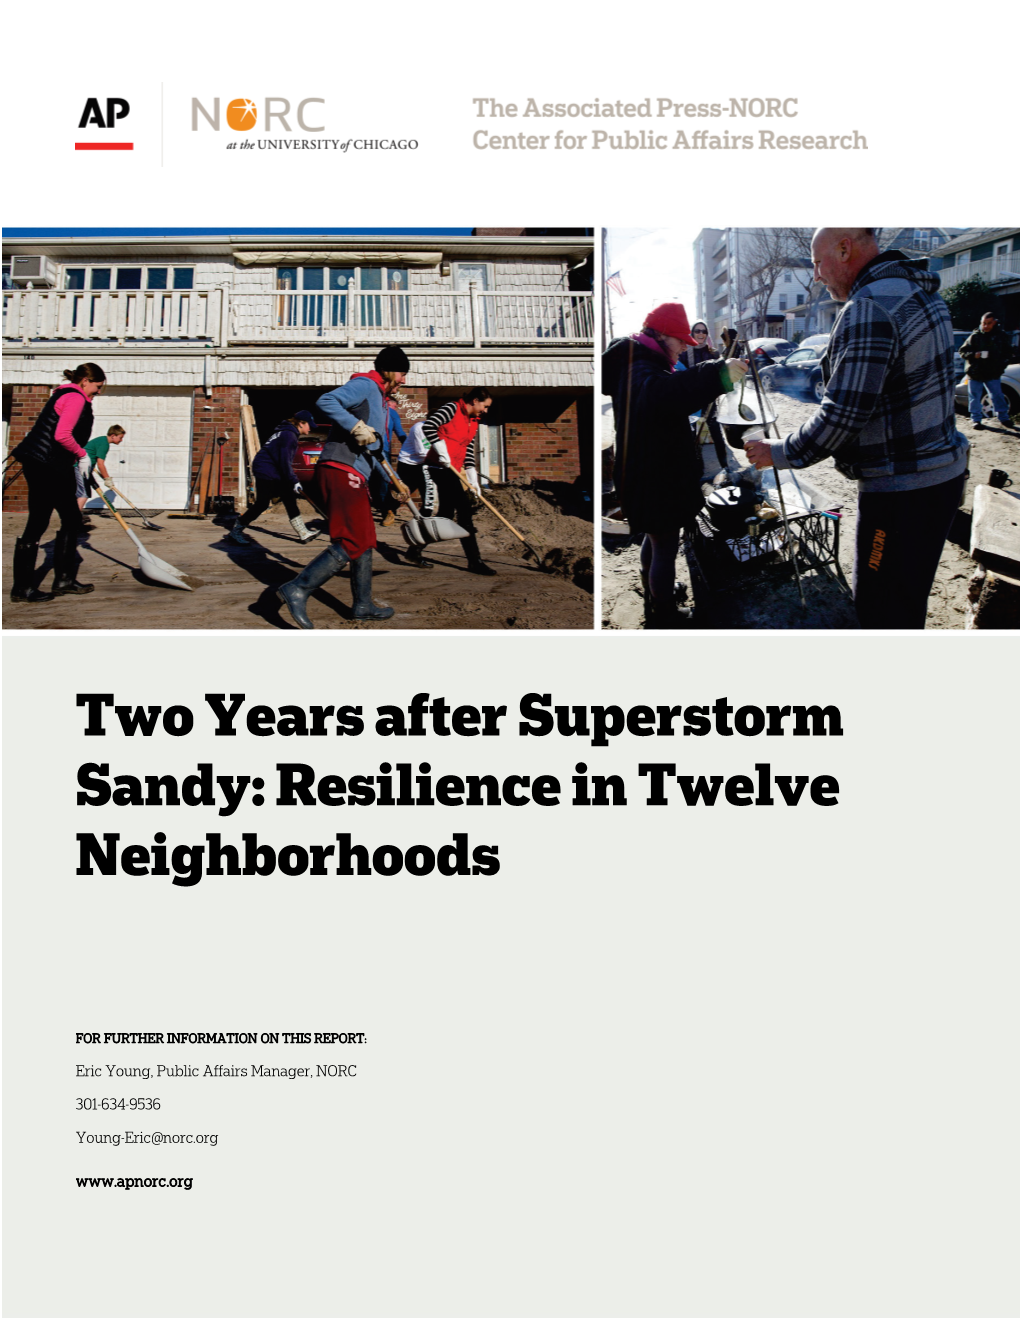 Two Years After Superstorm Sandy: Resilience in Twelve Neighborhoods